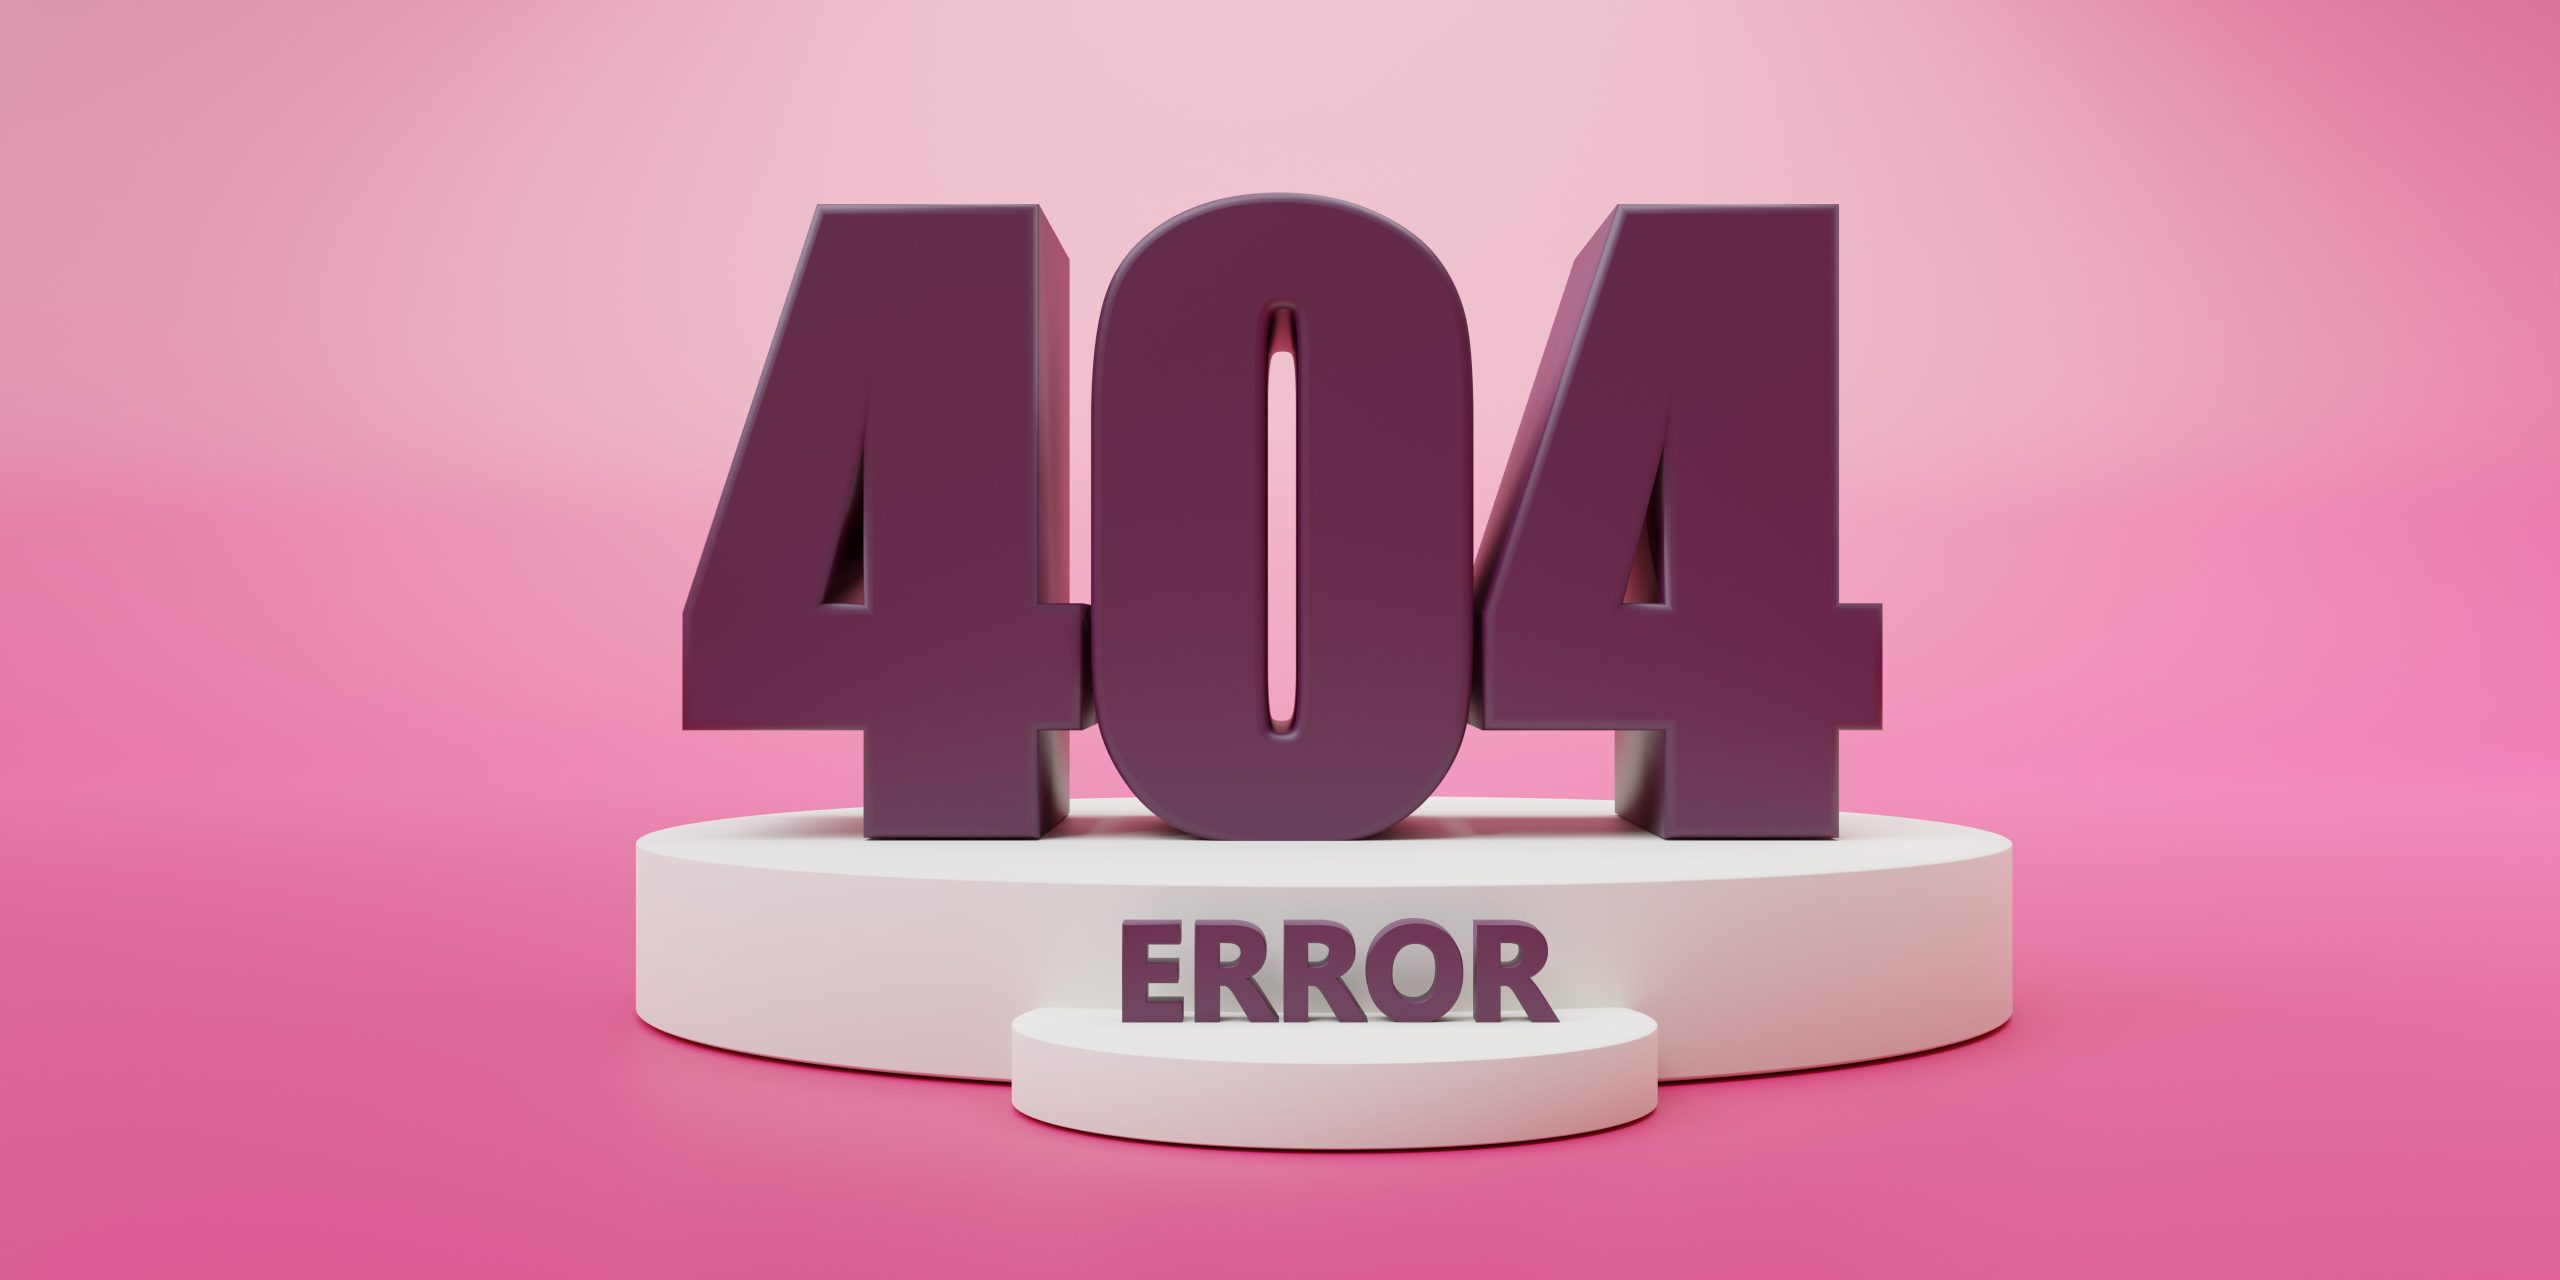 404-error-website-page-not-found-sign-on-pink-col-2022-10-27-03-02-08-utc-min